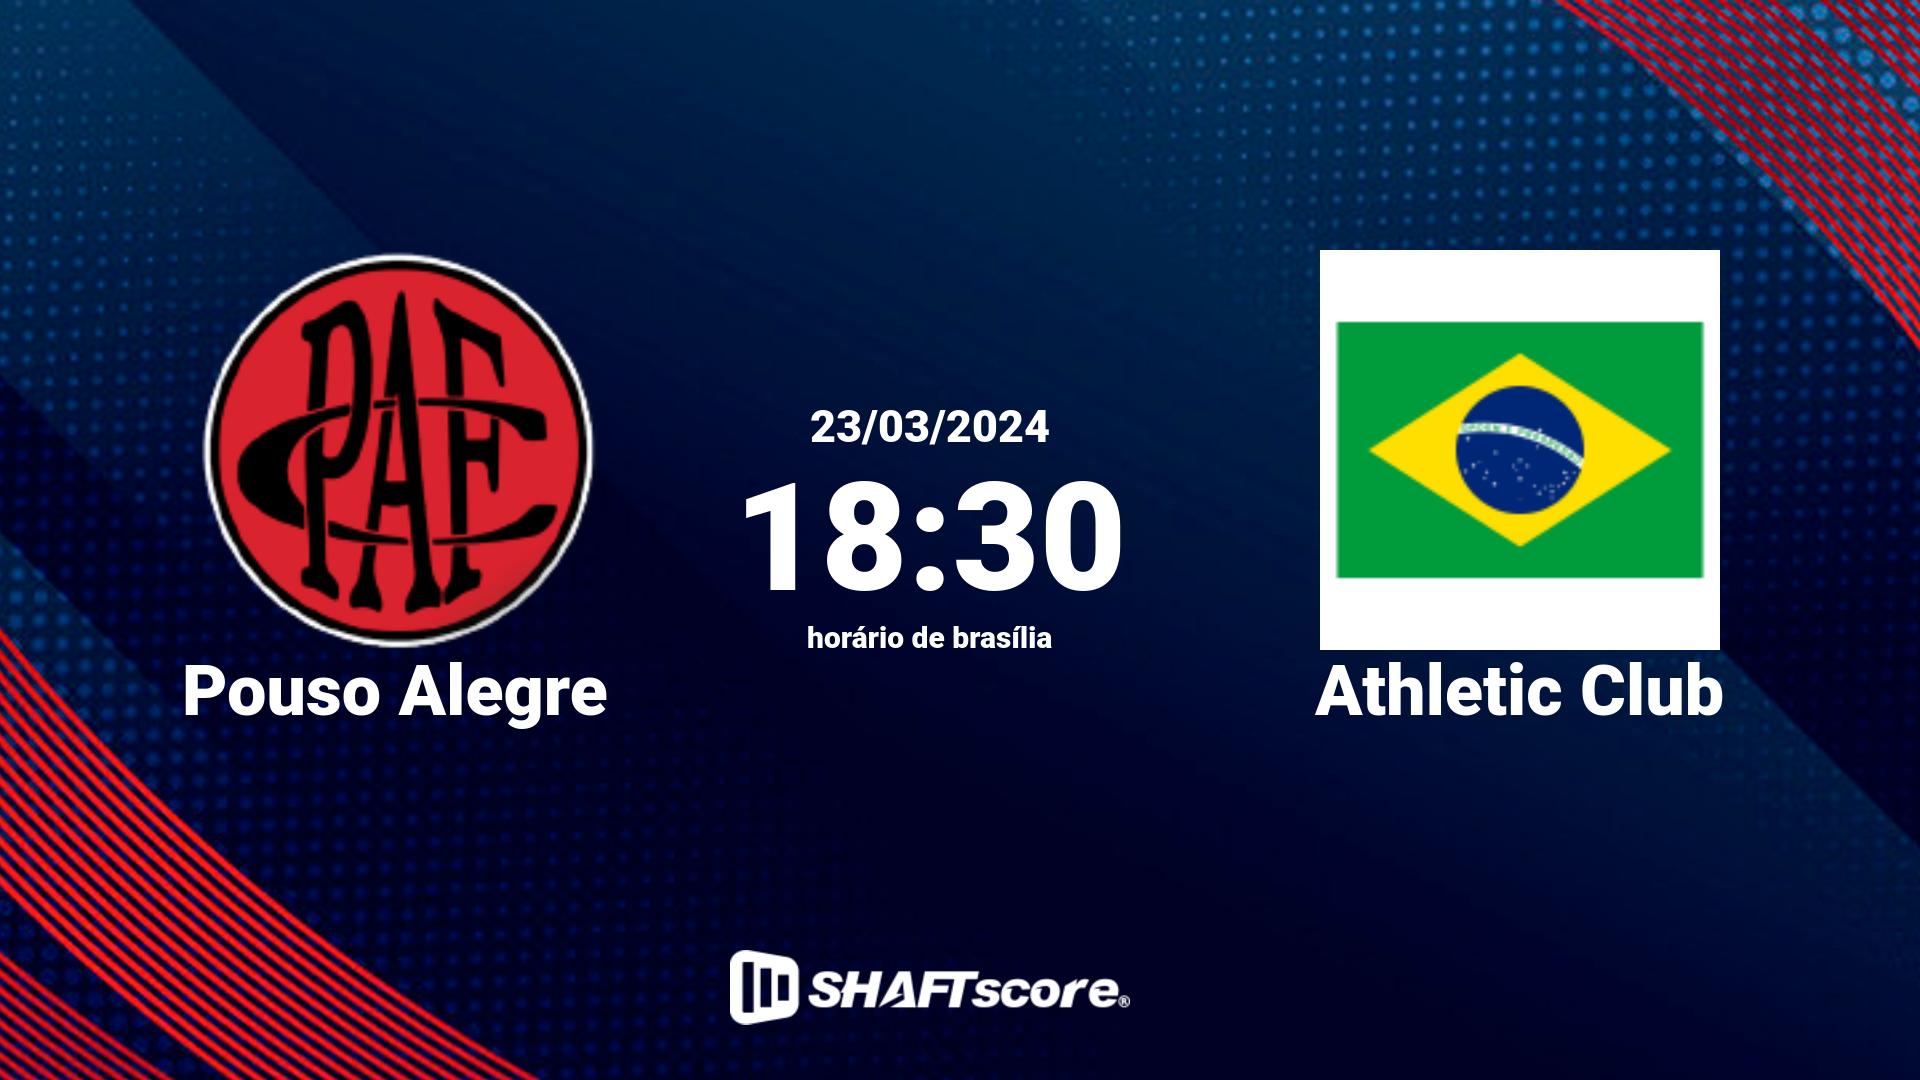 Estatísticas do jogo Pouso Alegre vs Athletic Club 23.03 18:30